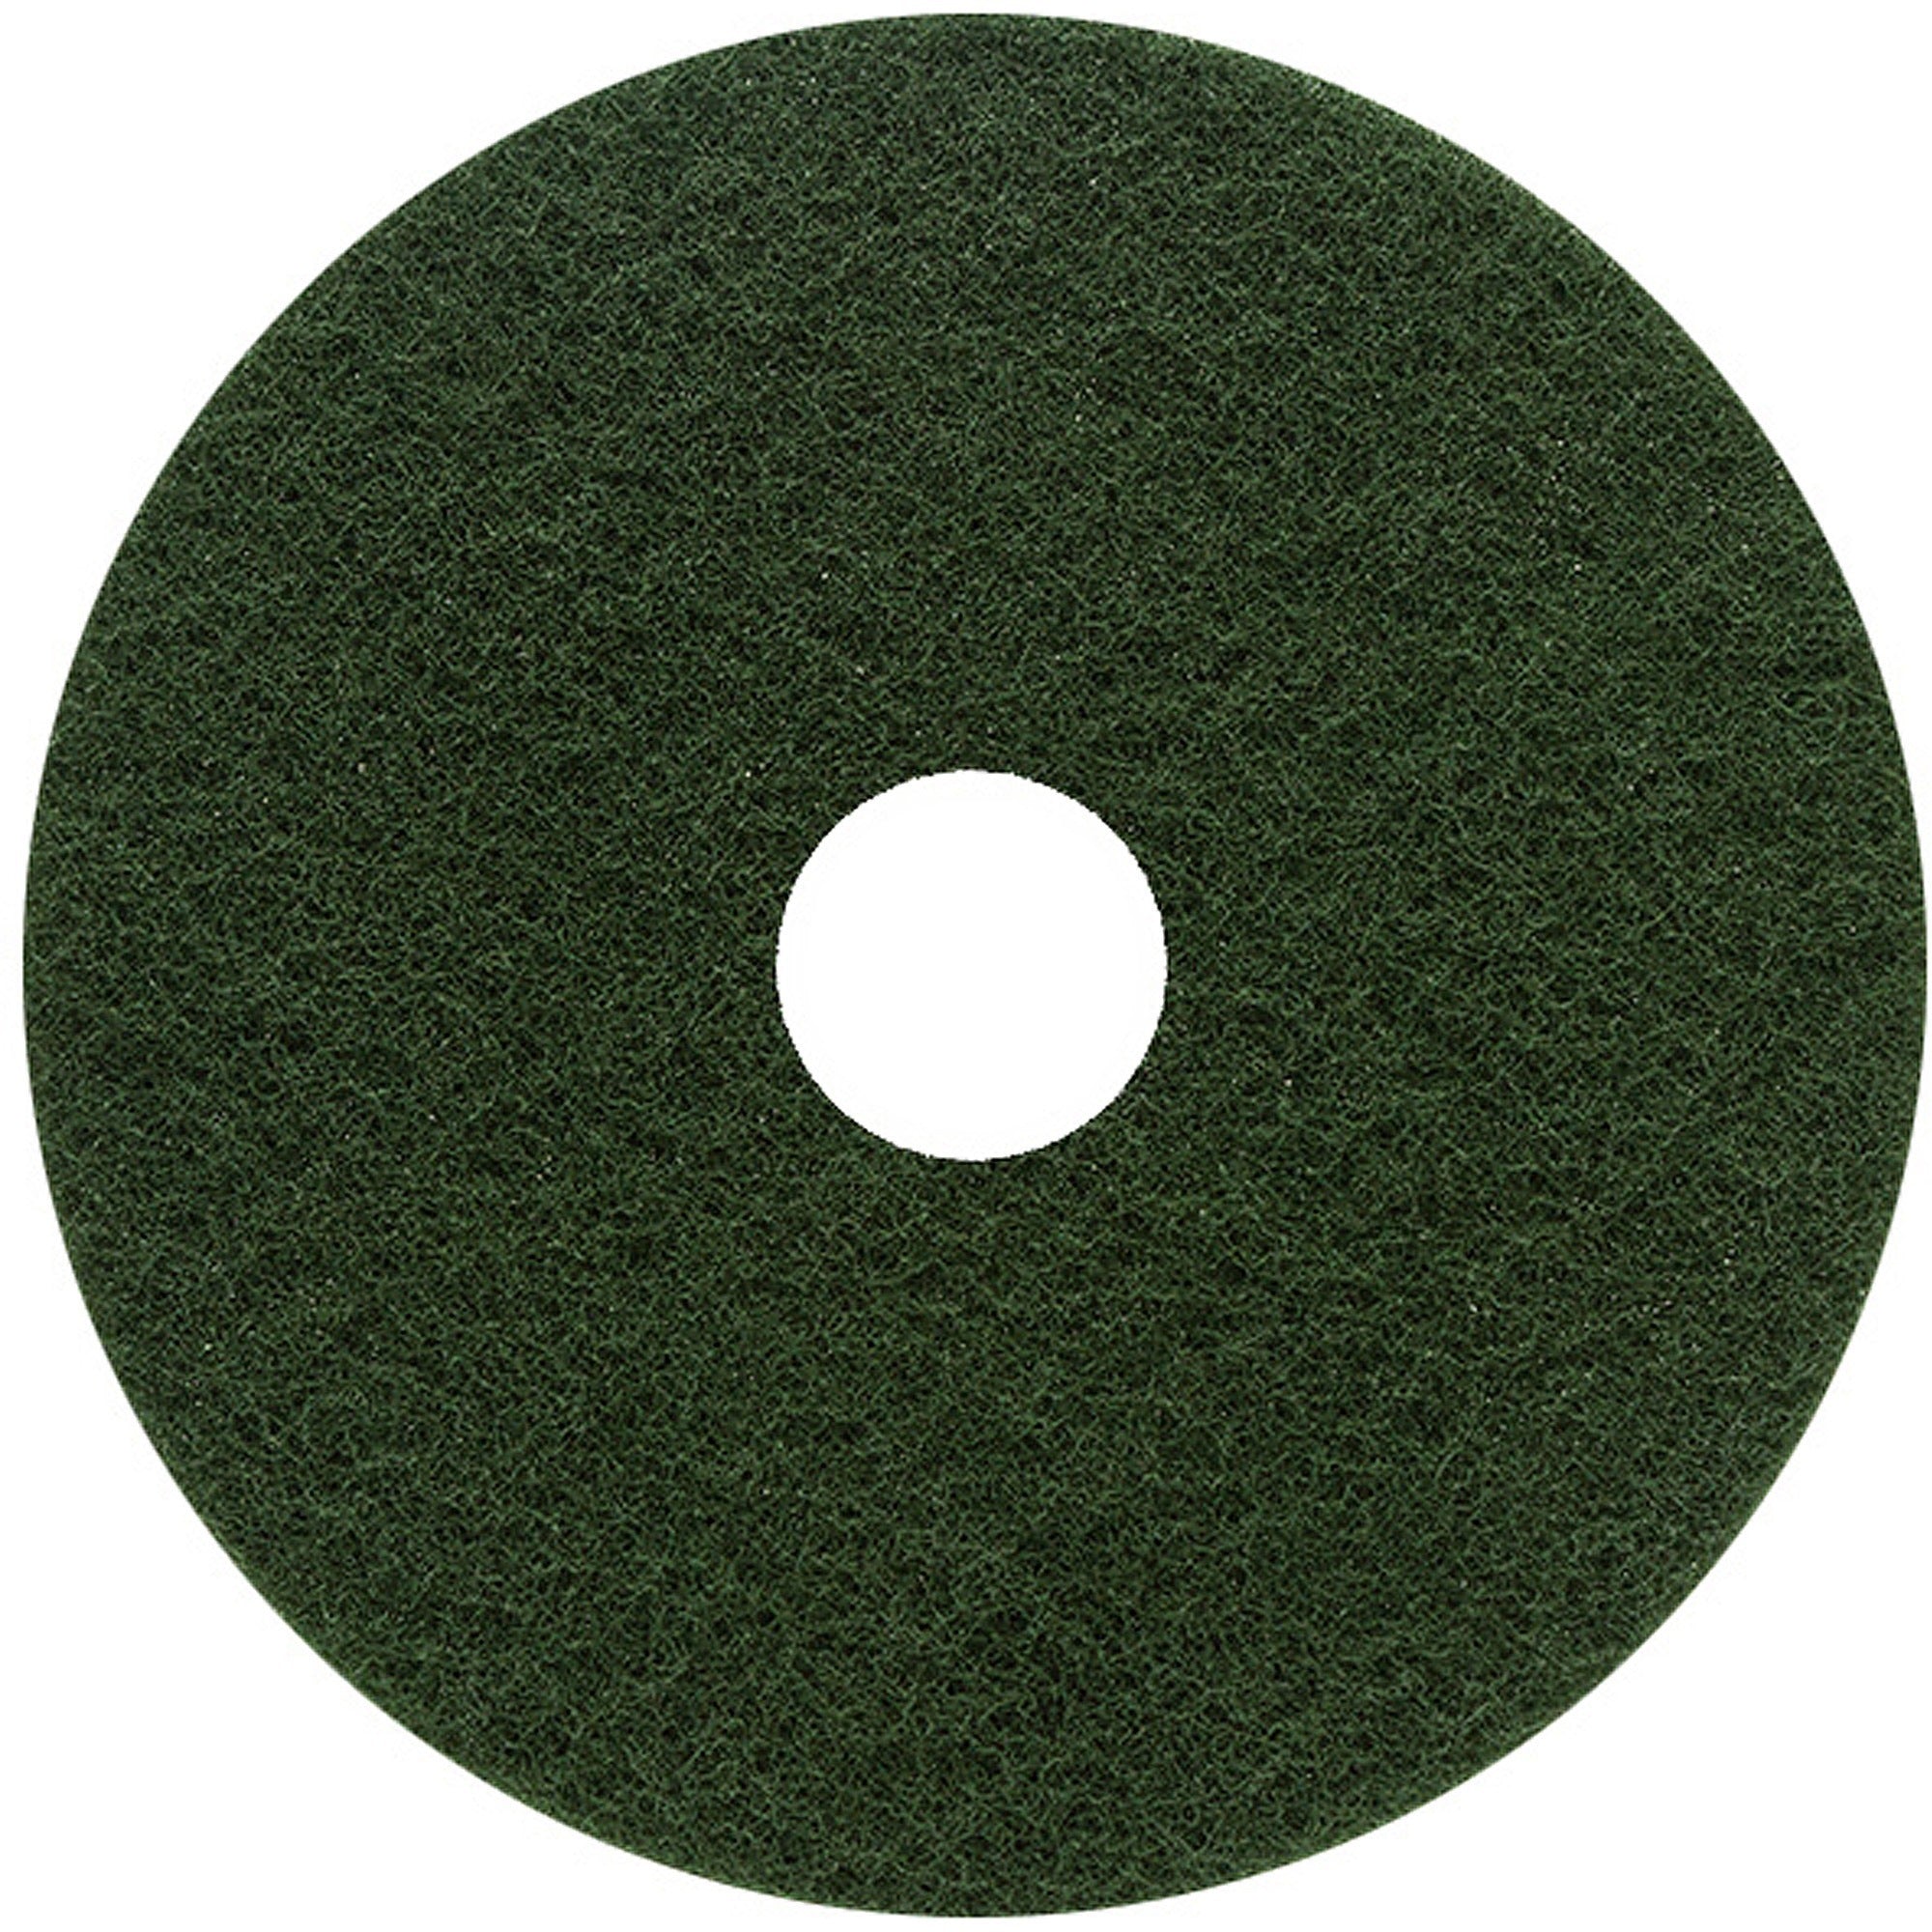 genuine-joe-scrubbing-floor-pad-5-carton-x-18-diameter-scrubbing-175-rpm-to-800-rpm-speed-supported-heavy-duty-long-lasting-fiber-green_gjo18402 - 1